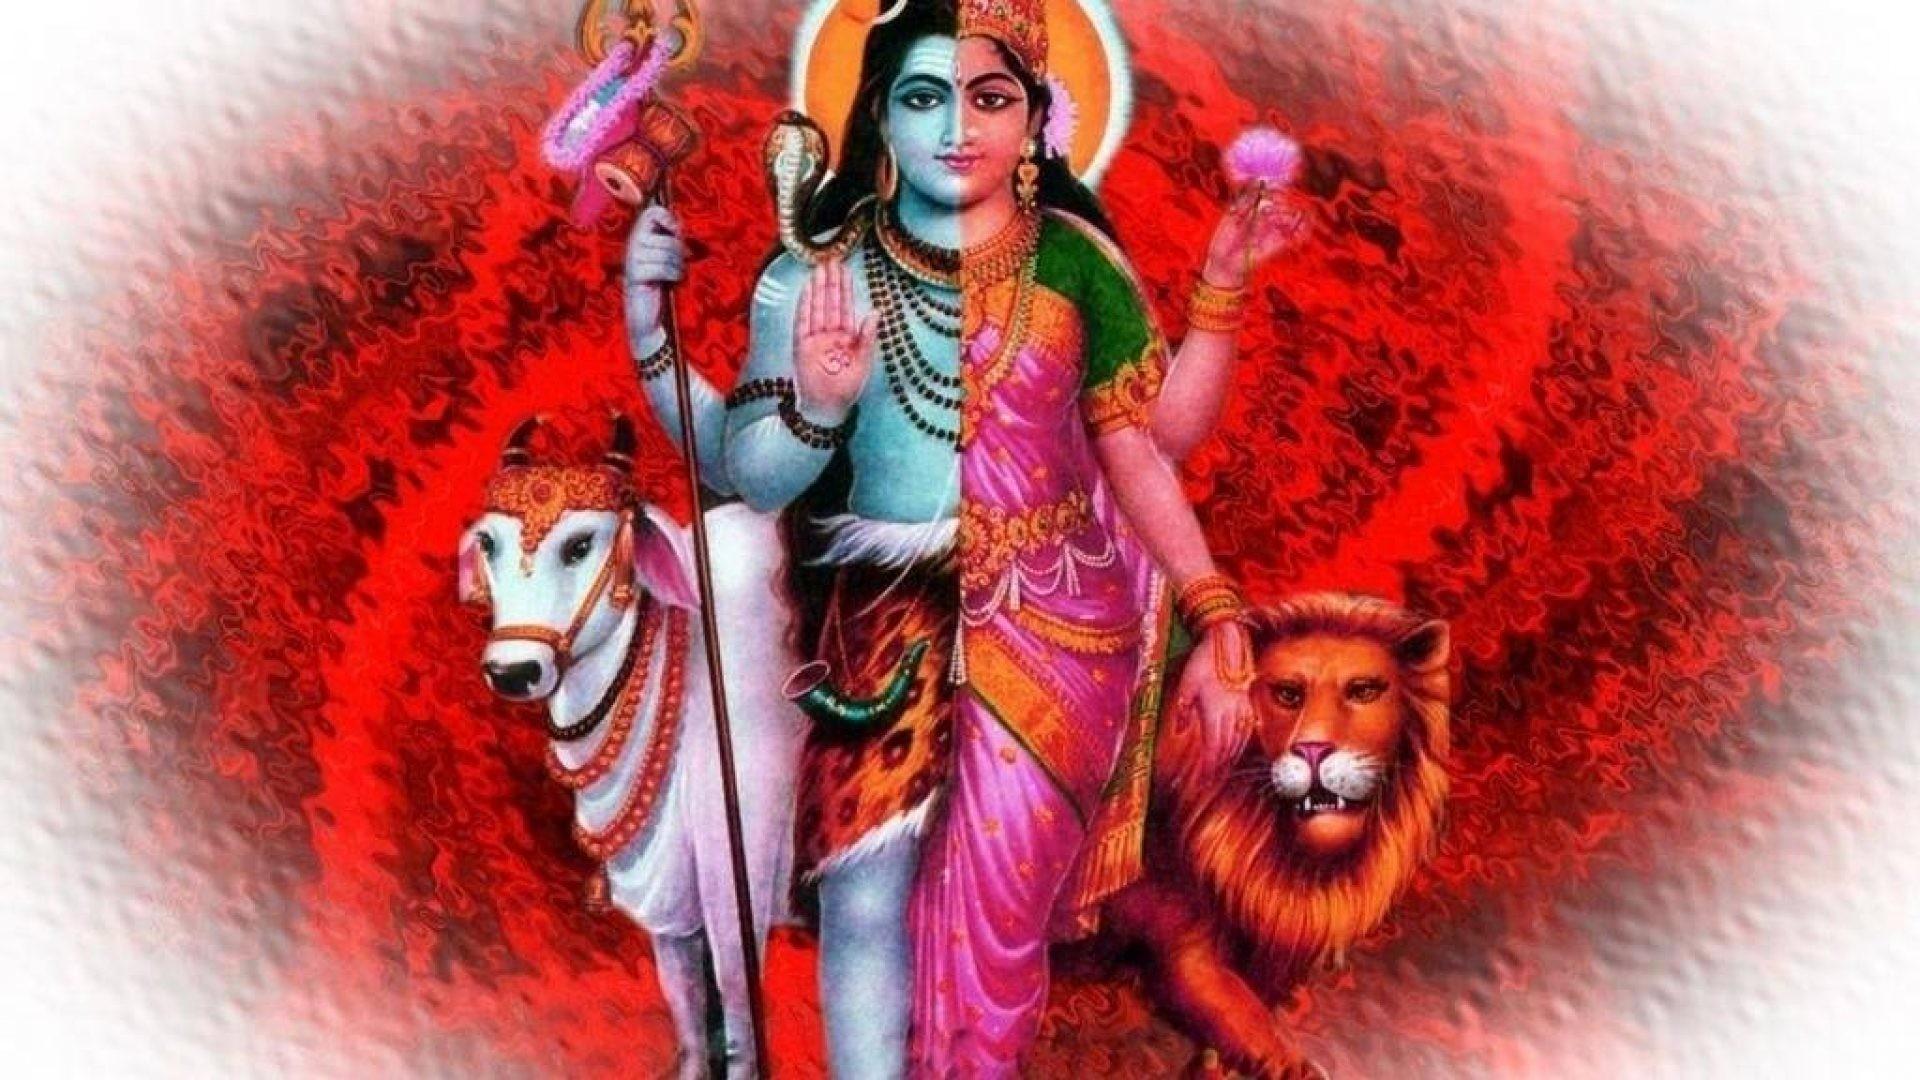 Lord Shiva Parvati Image Wallpaper 3D. Hindu Gods and Goddesses